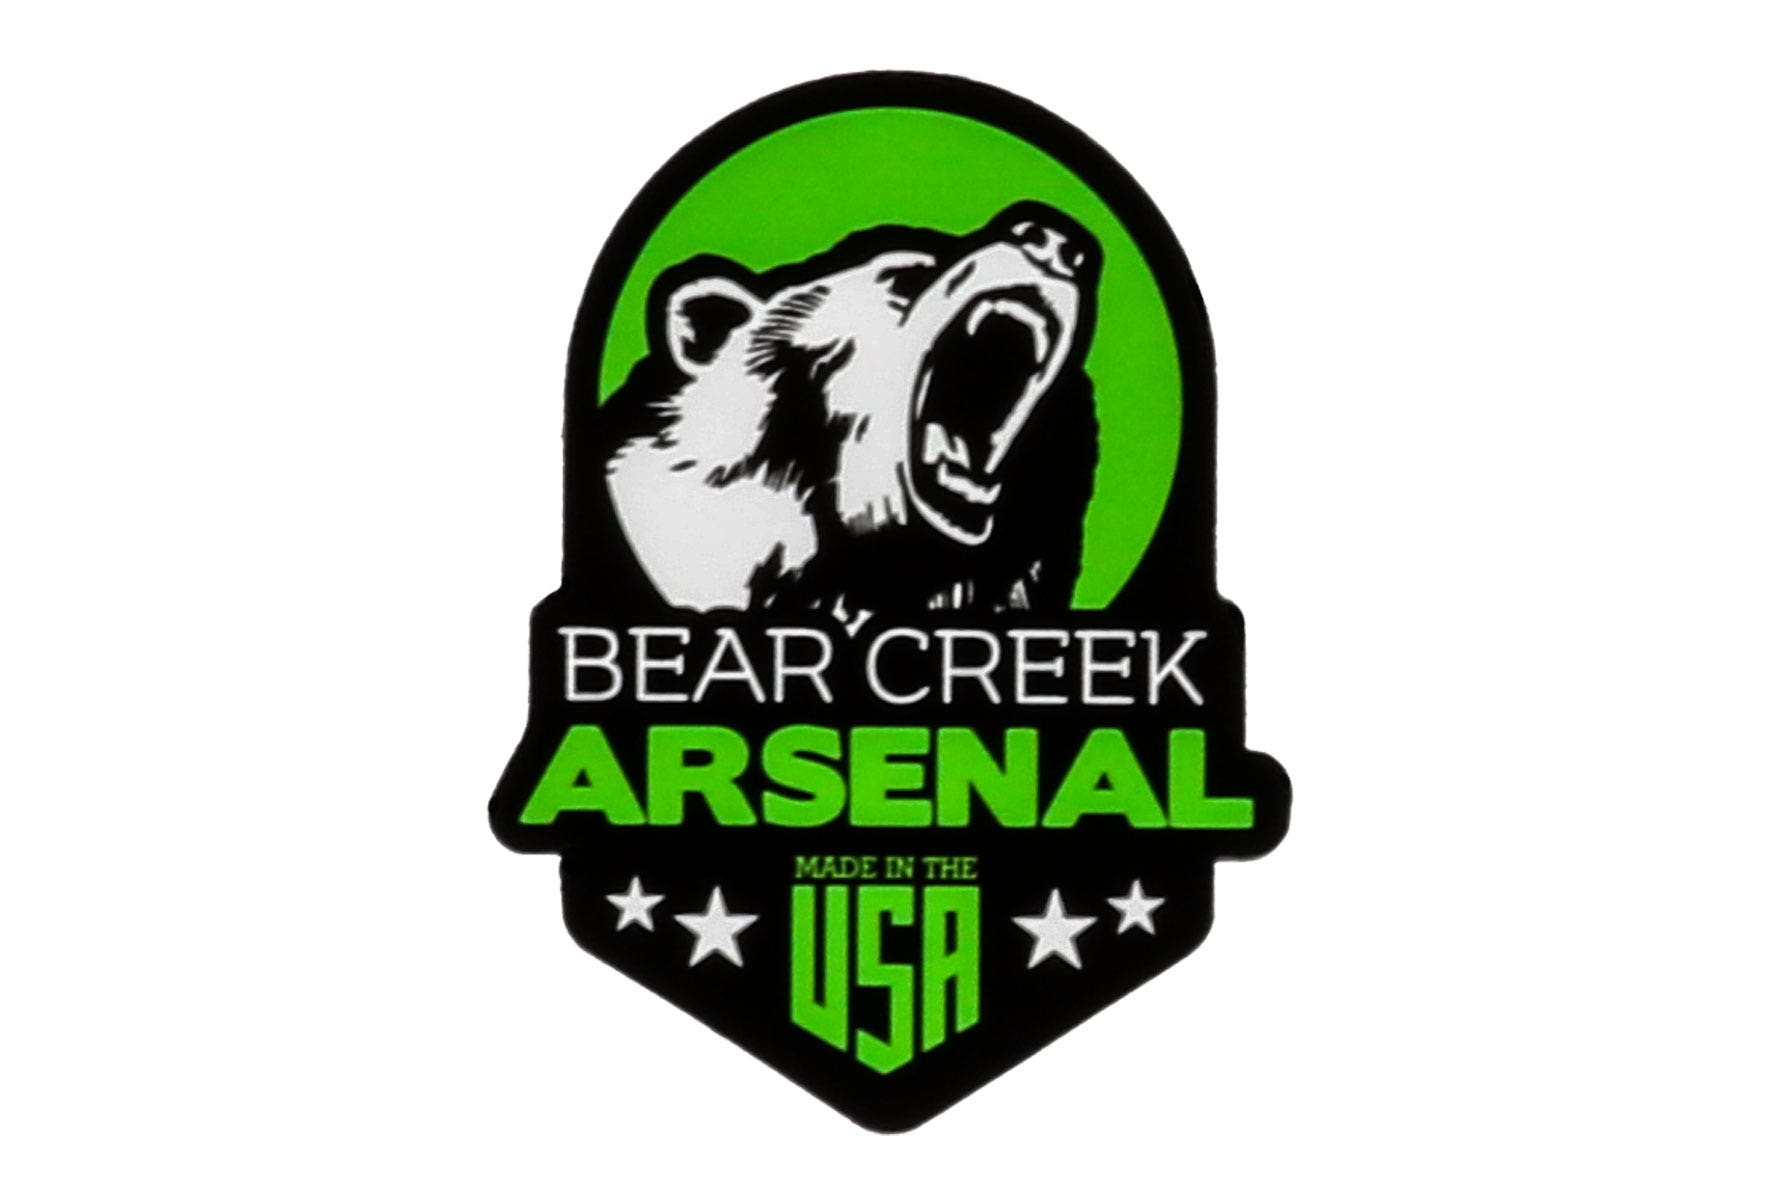 Bear creek arsenal